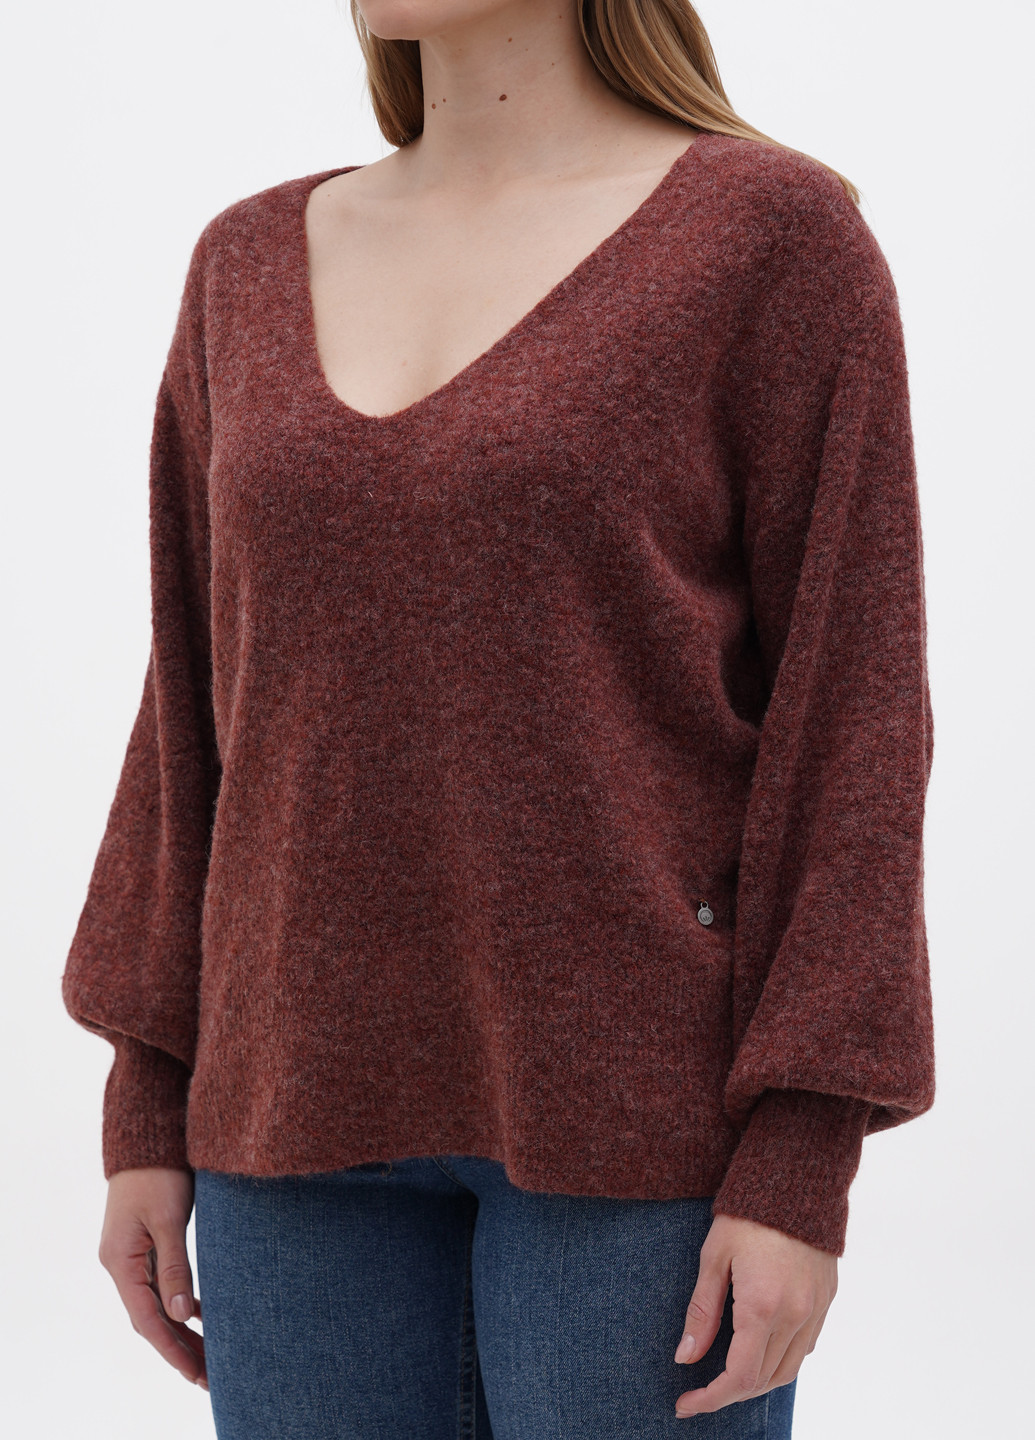 Коричневый демисезонный пуловер пуловер Cream